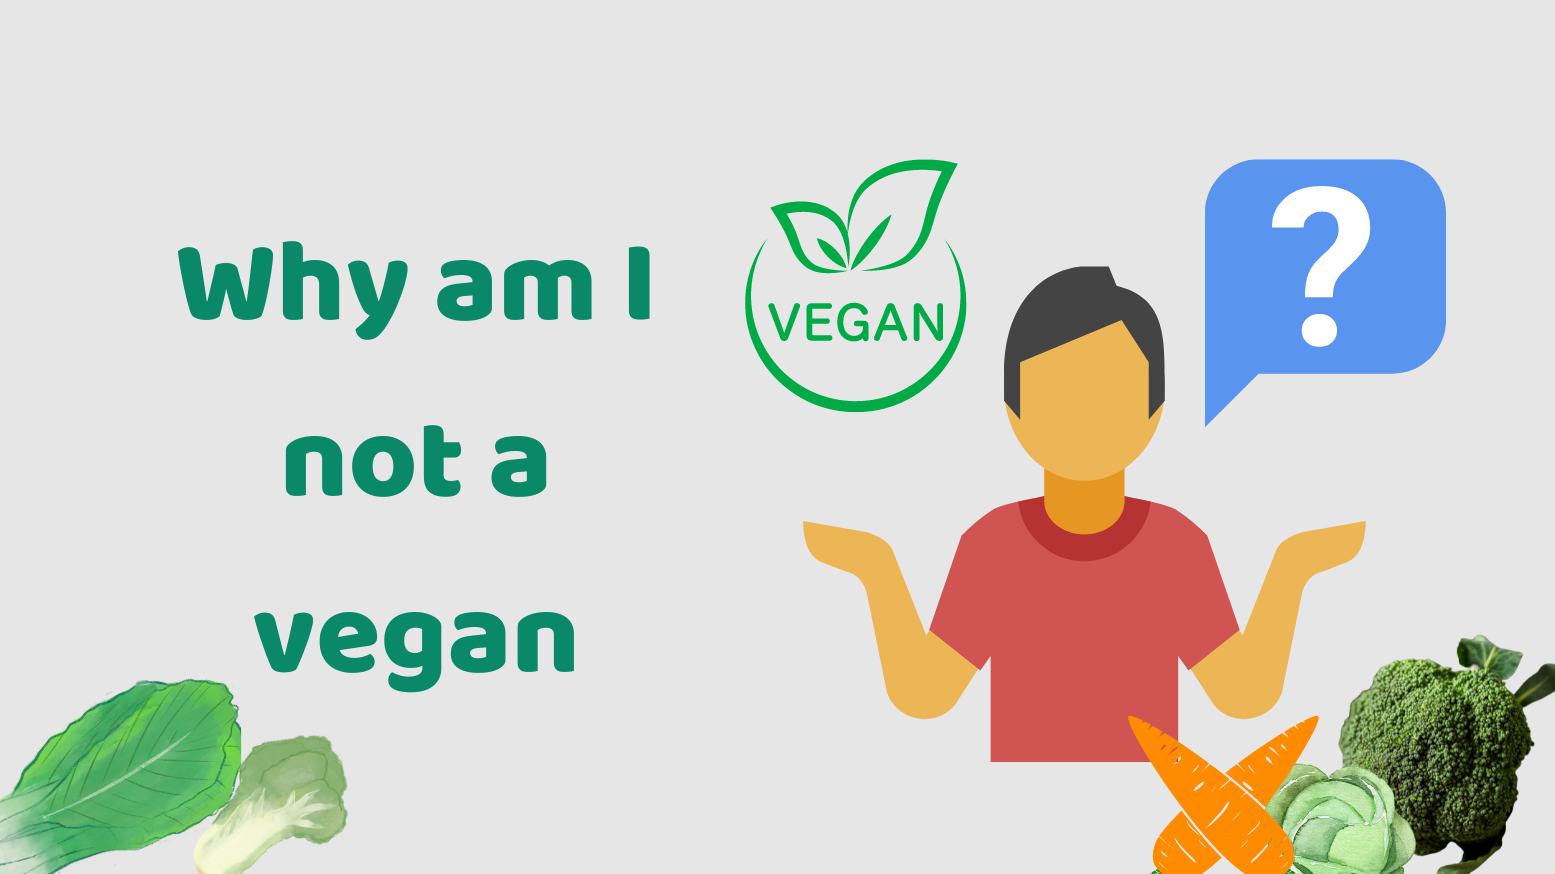 Why am I not a vegan